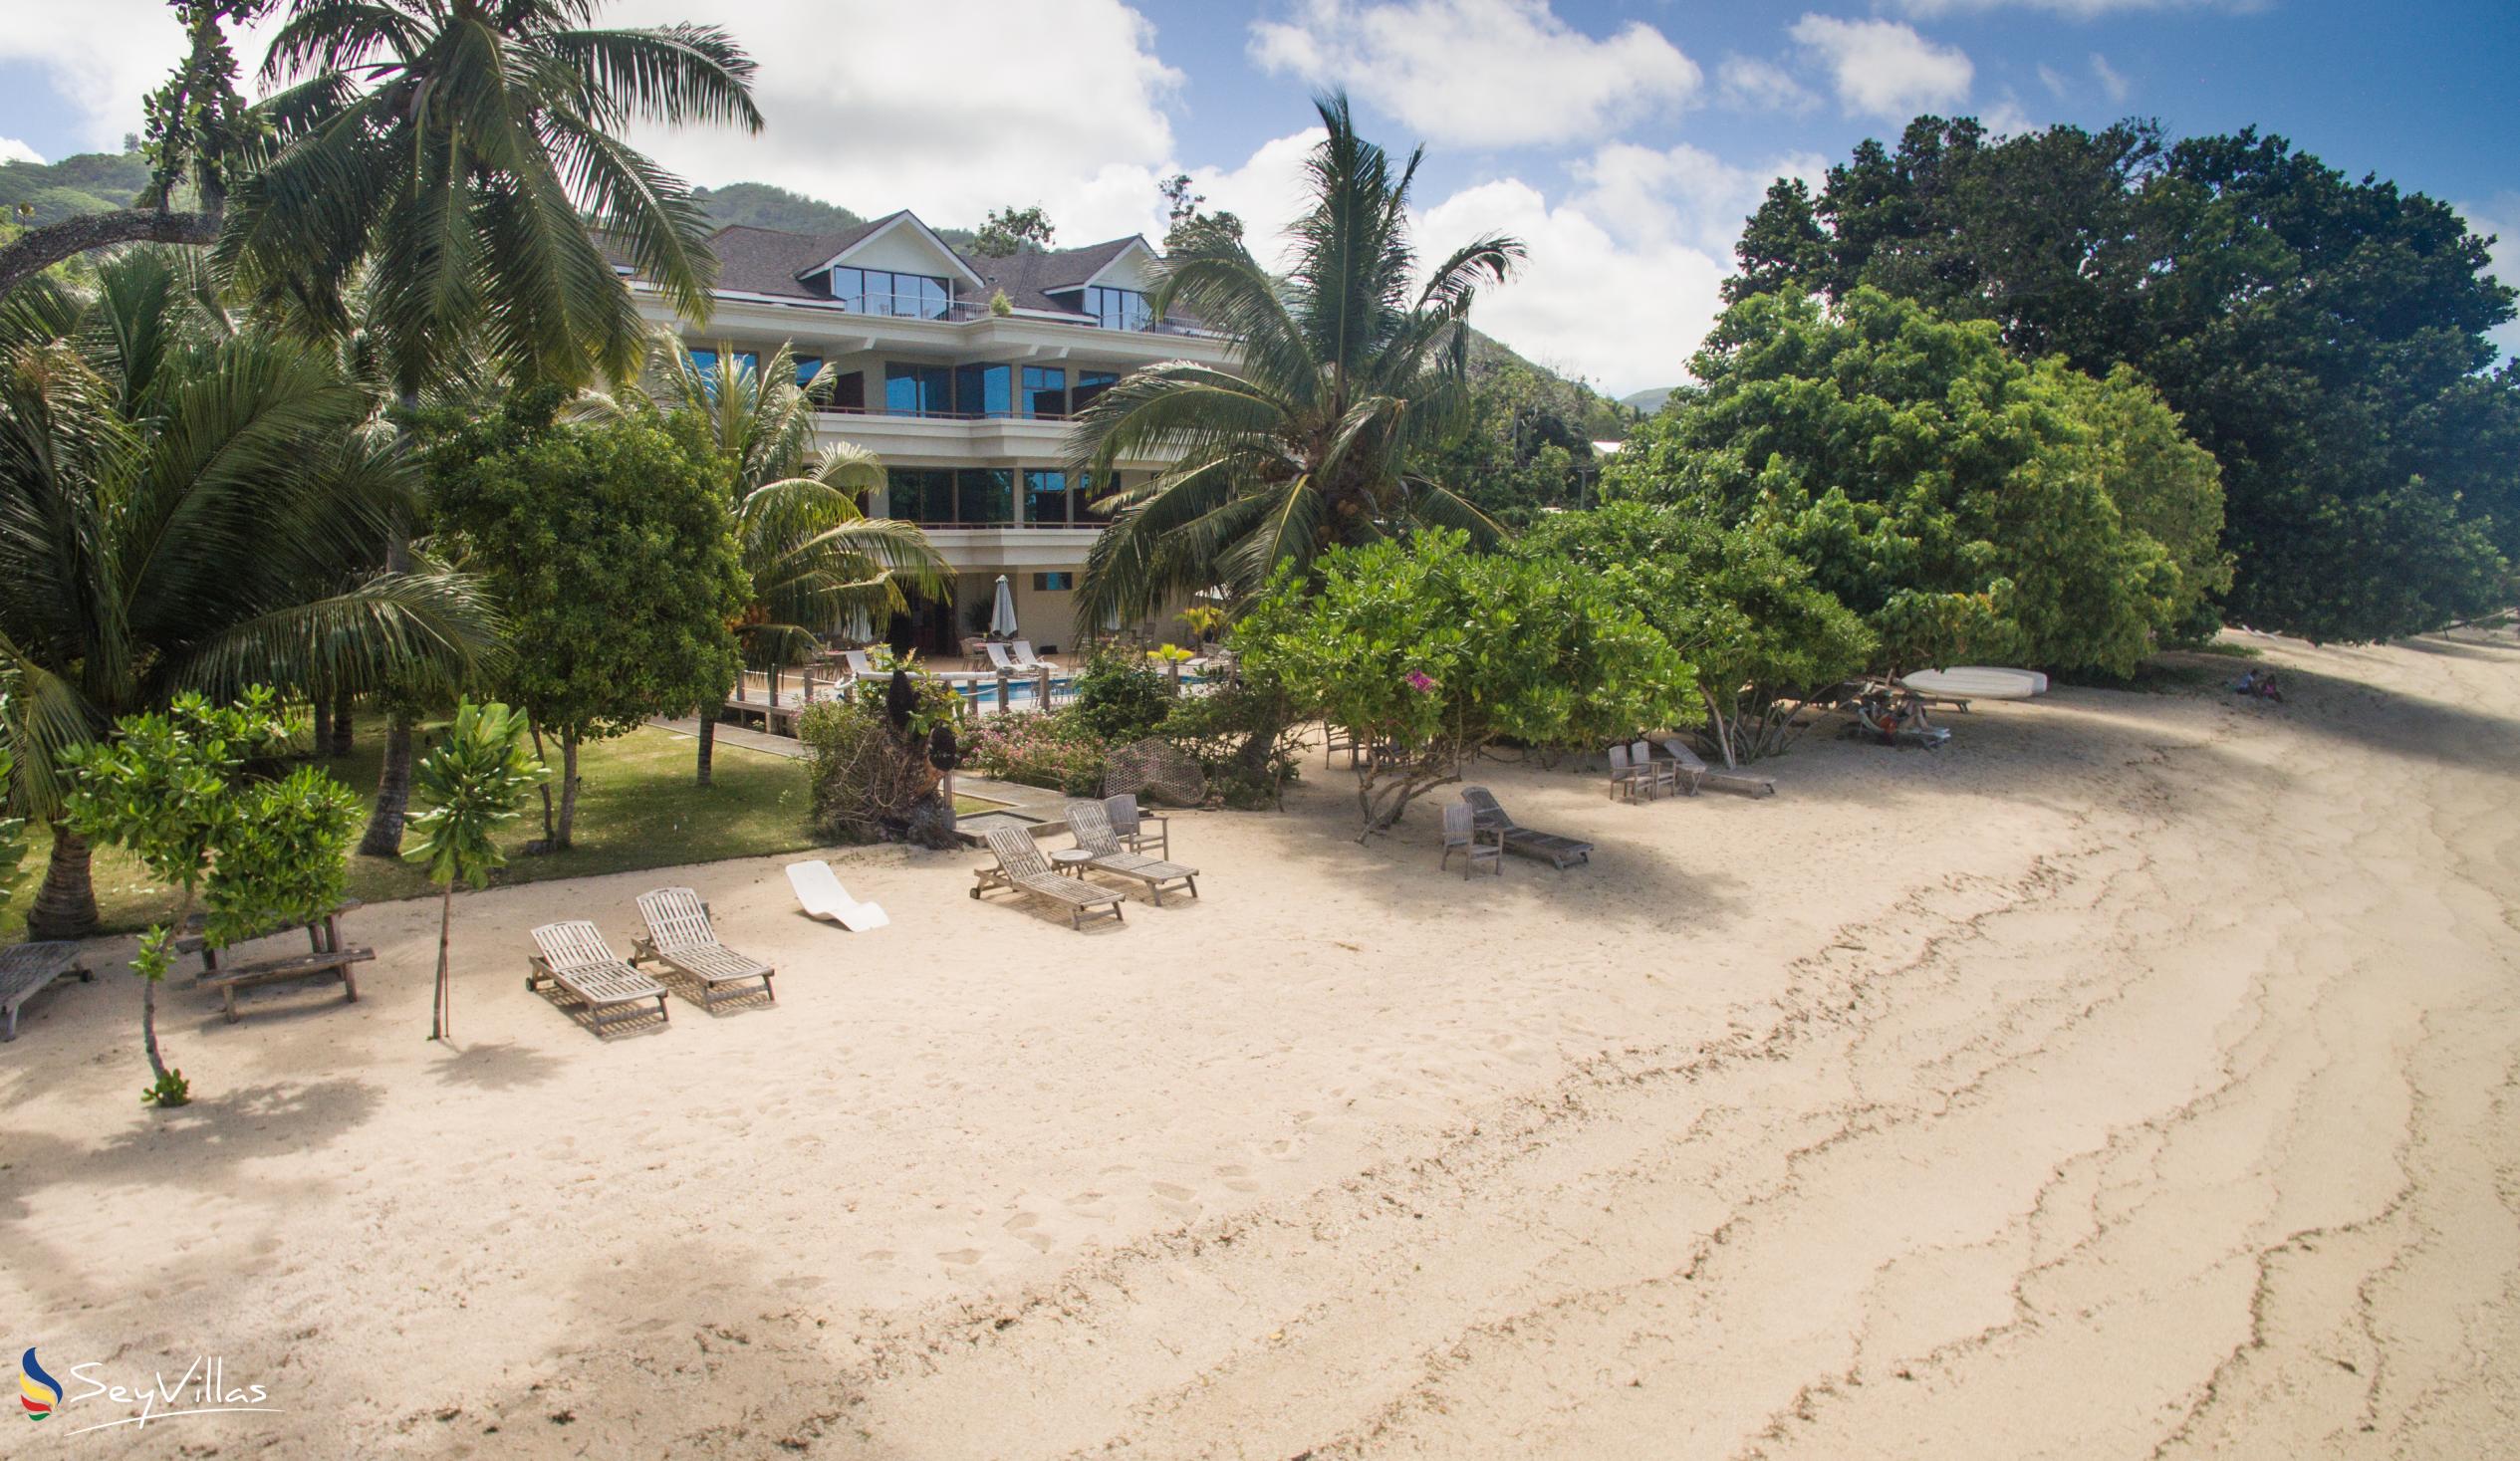 Foto 3: Crown Beach Hotel - Aussenbereich - Mahé (Seychellen)